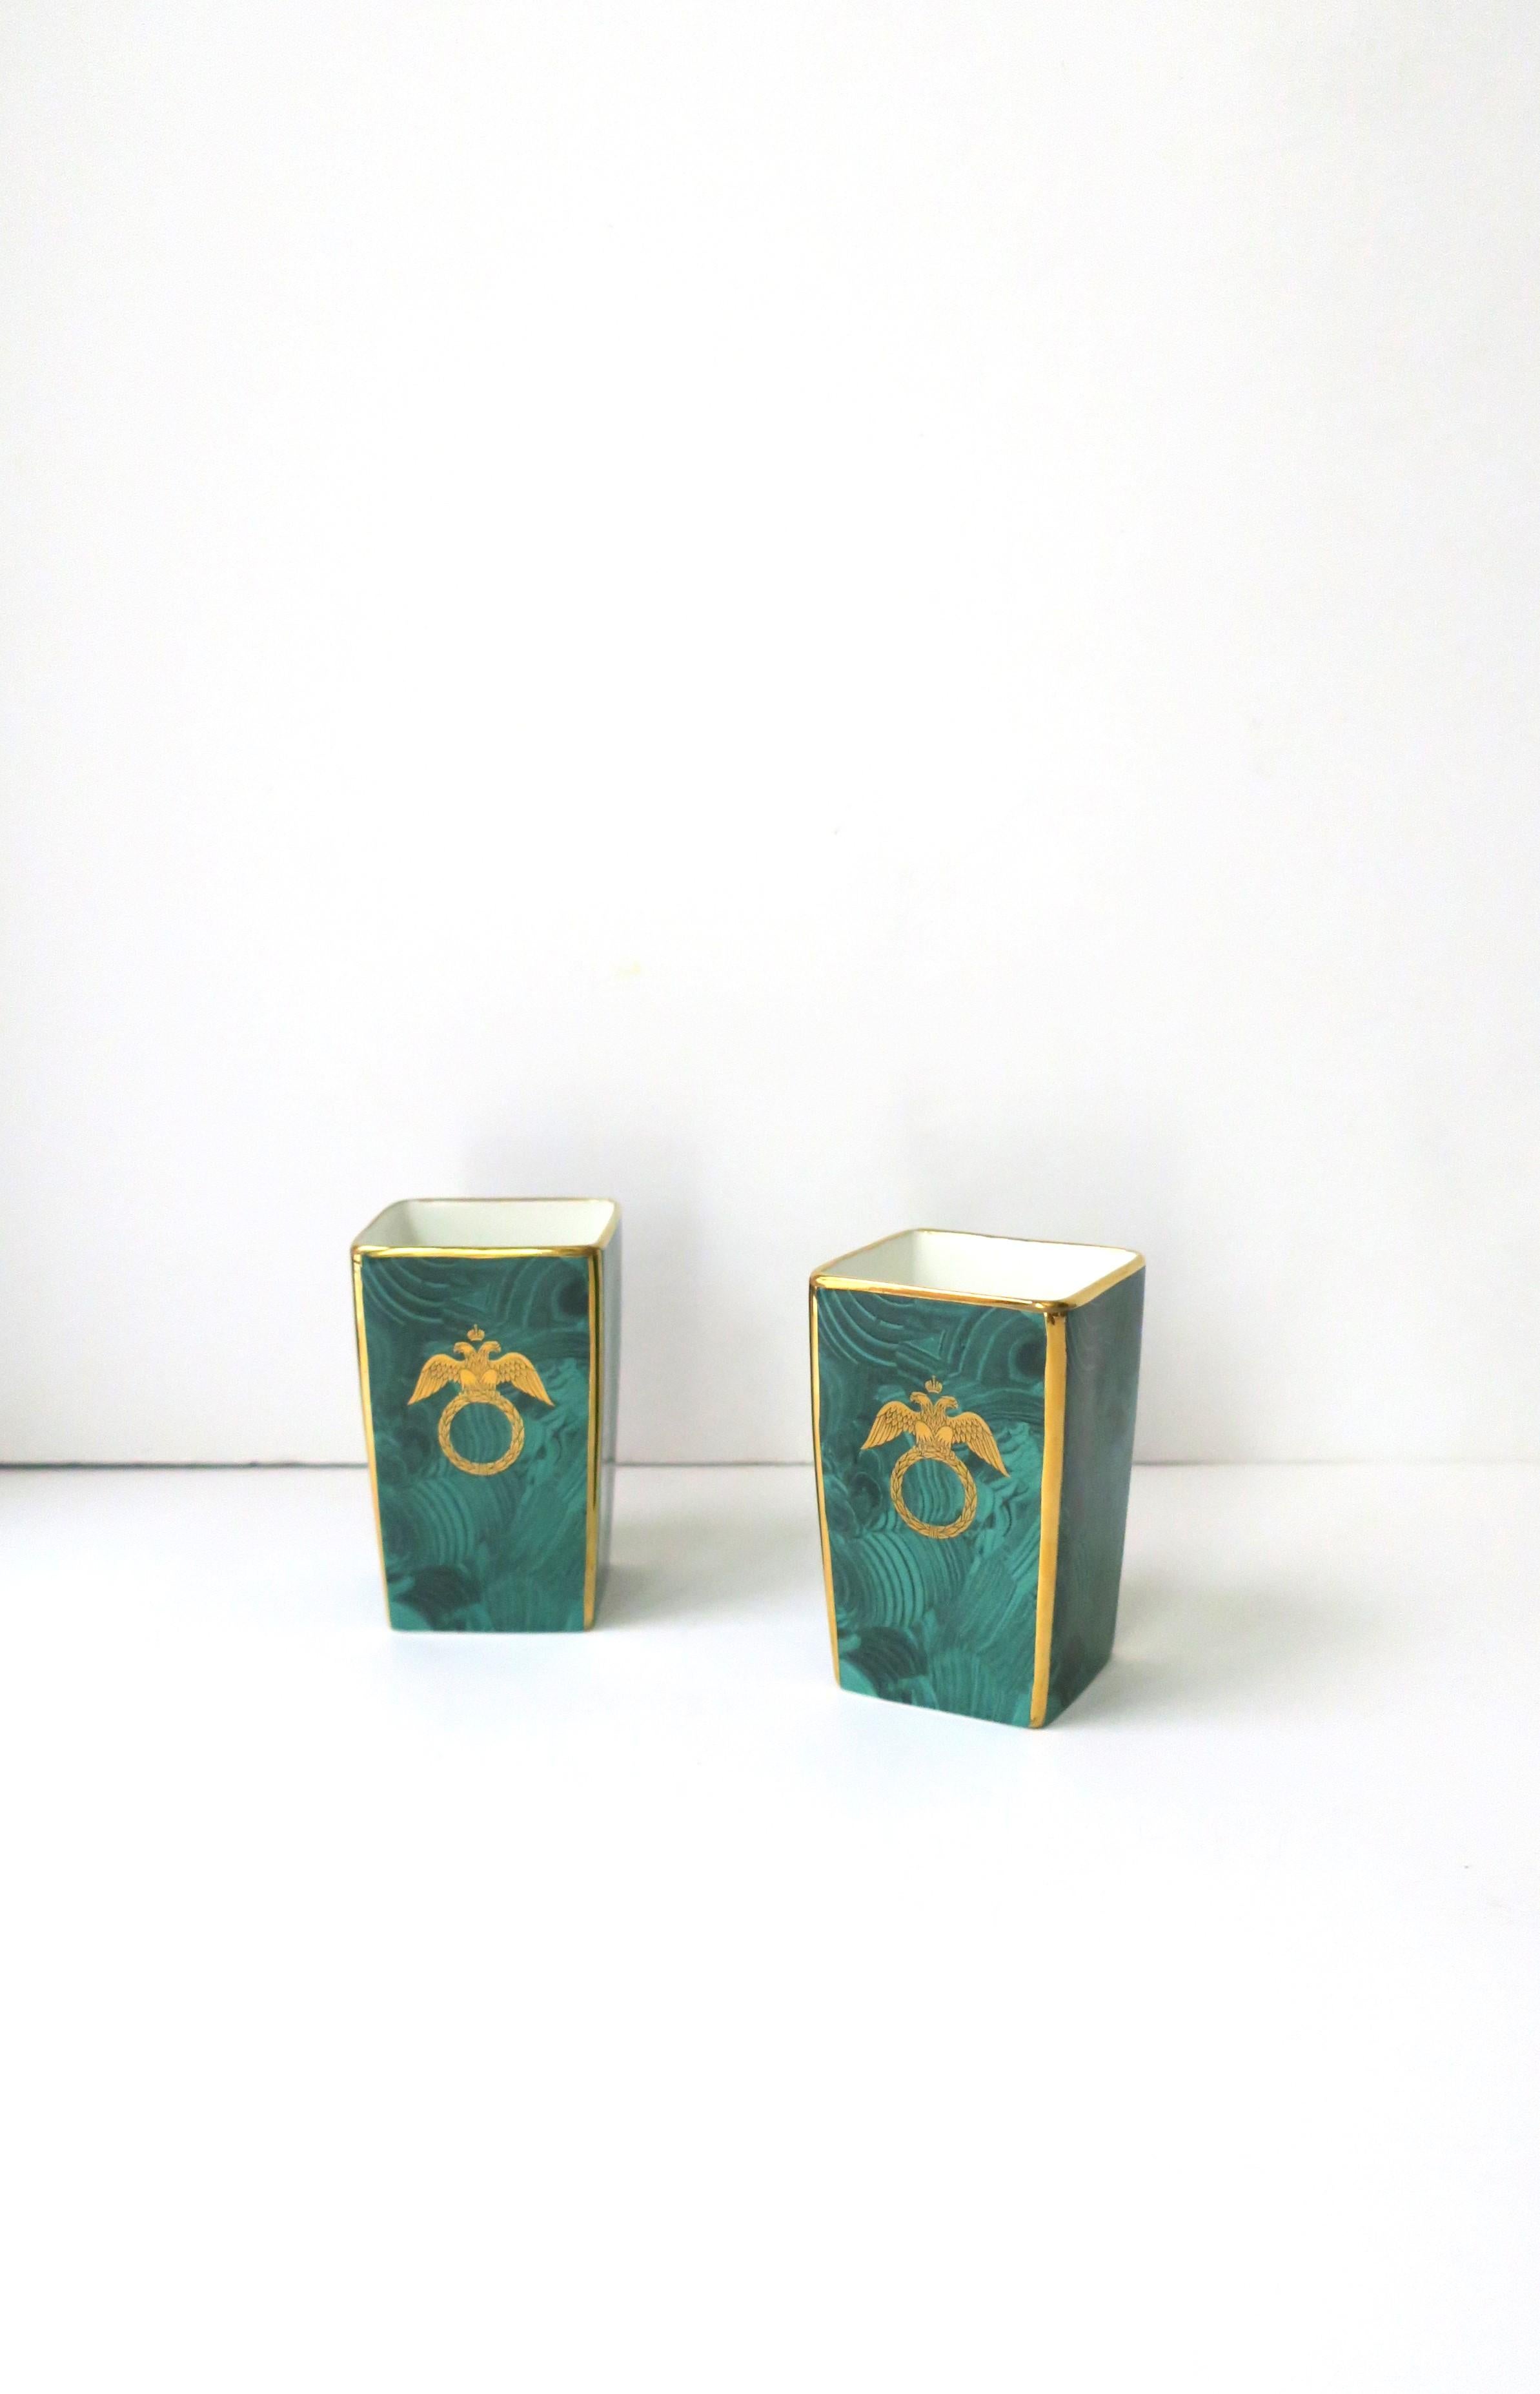 Malachite and Gold Porcelain Desk Pen or Vanity Holders, or Vases, England, Pair 3